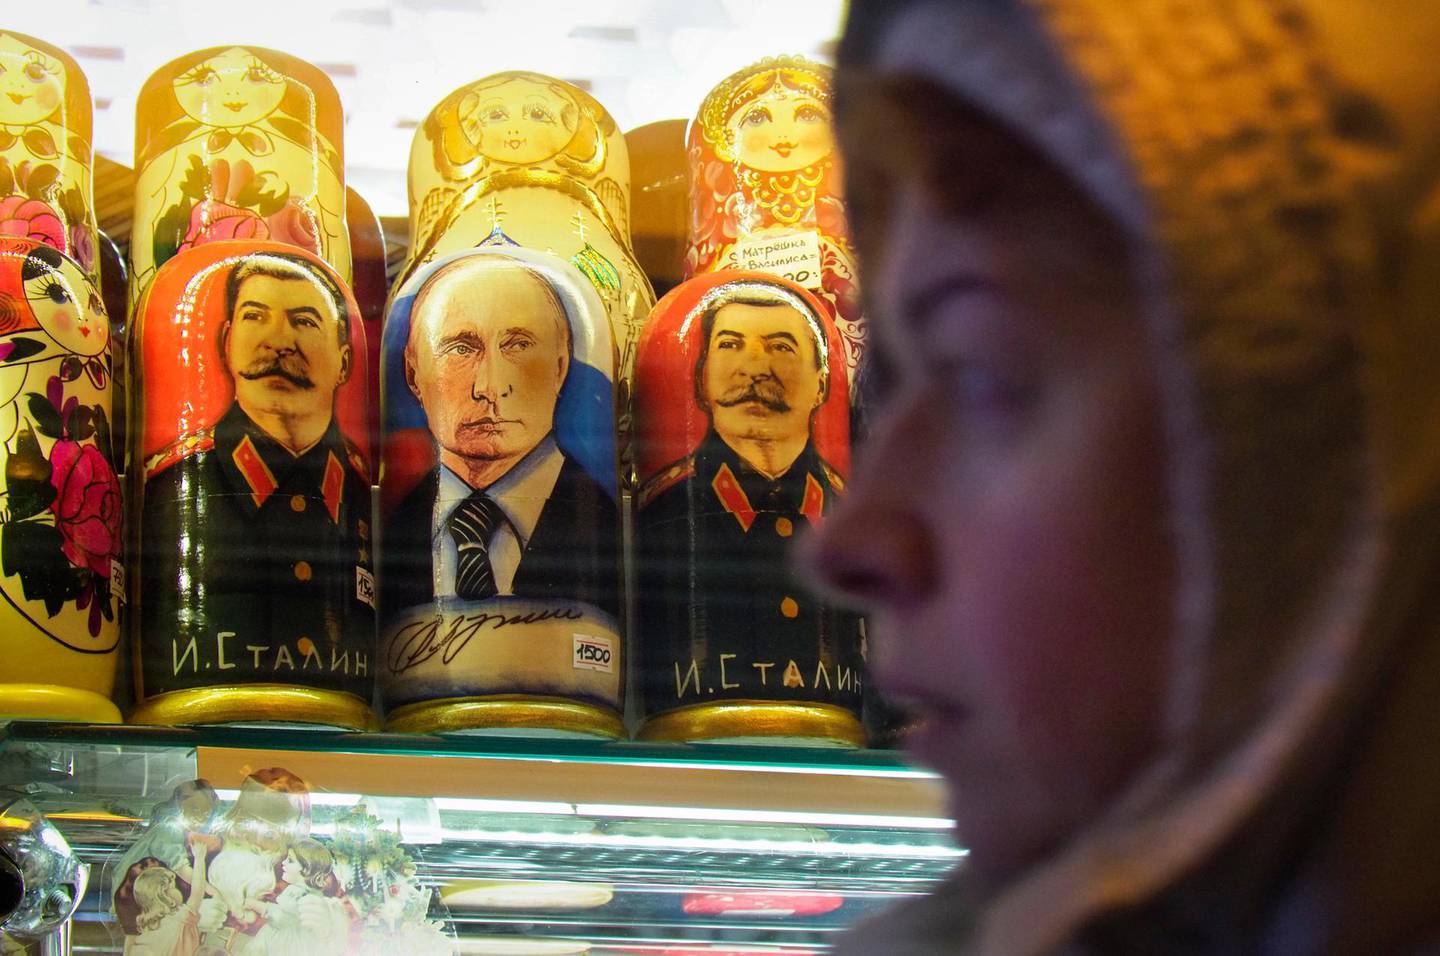 A woman walks past traditional Russian wooden dolls called Matryoshka depicting Russian President Vladimir Putin and Josef Stalin, displayed for sale at a souvenir street shop in St. Petersburg, Russia, Saturday, Dec. 28, 2019. (AP Photo/Dmitri Lovetsky)